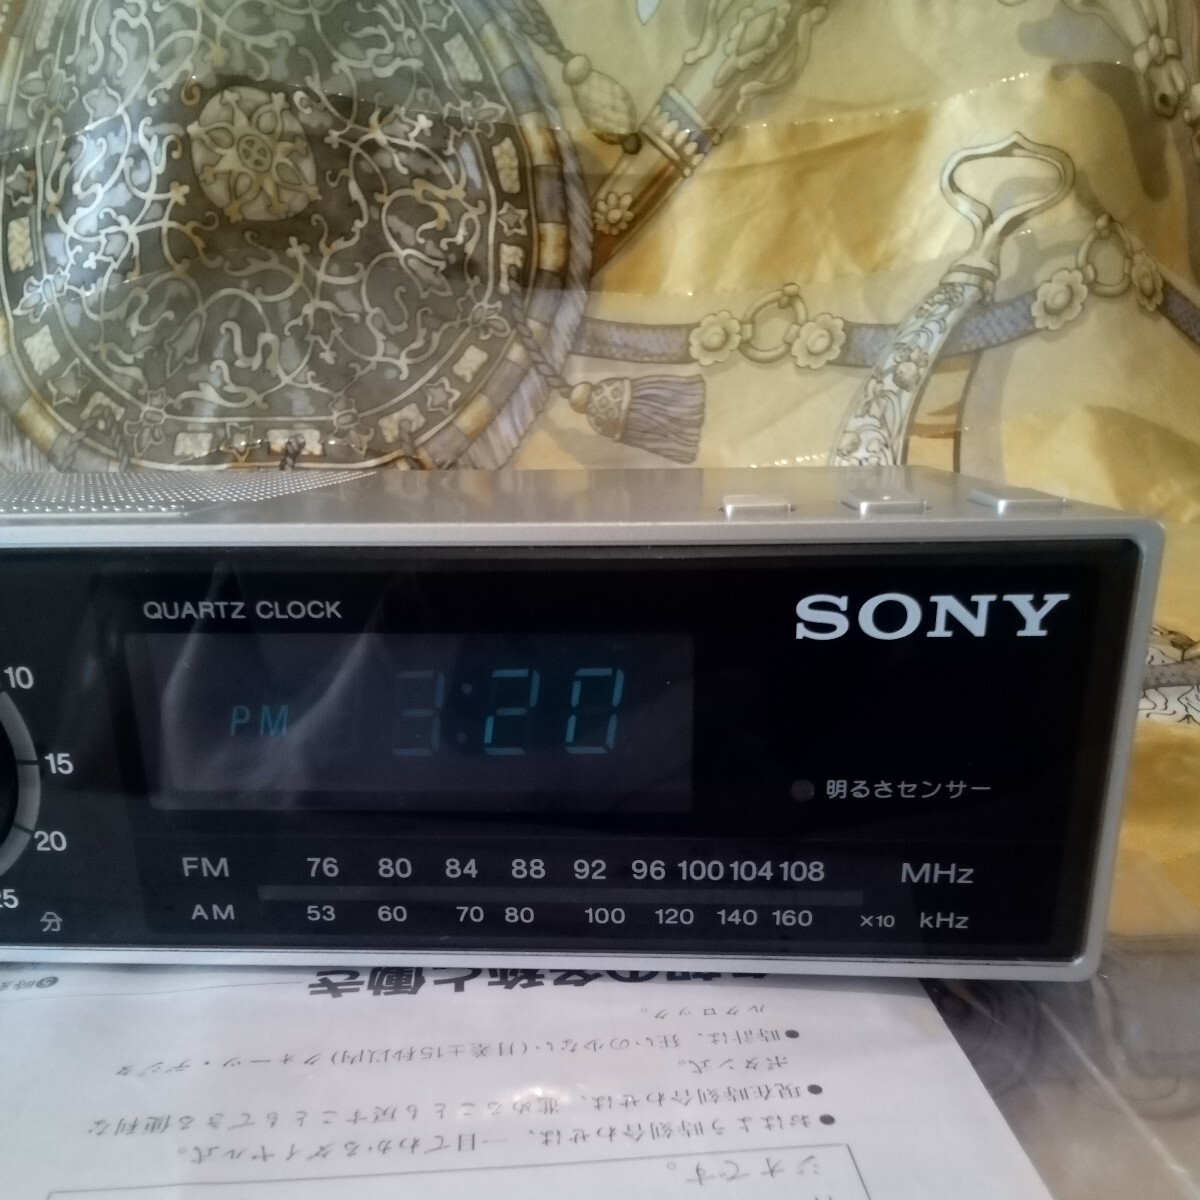 SONY FM/AM digital clock radio EZ-2 operation goods ( Showa era antique )